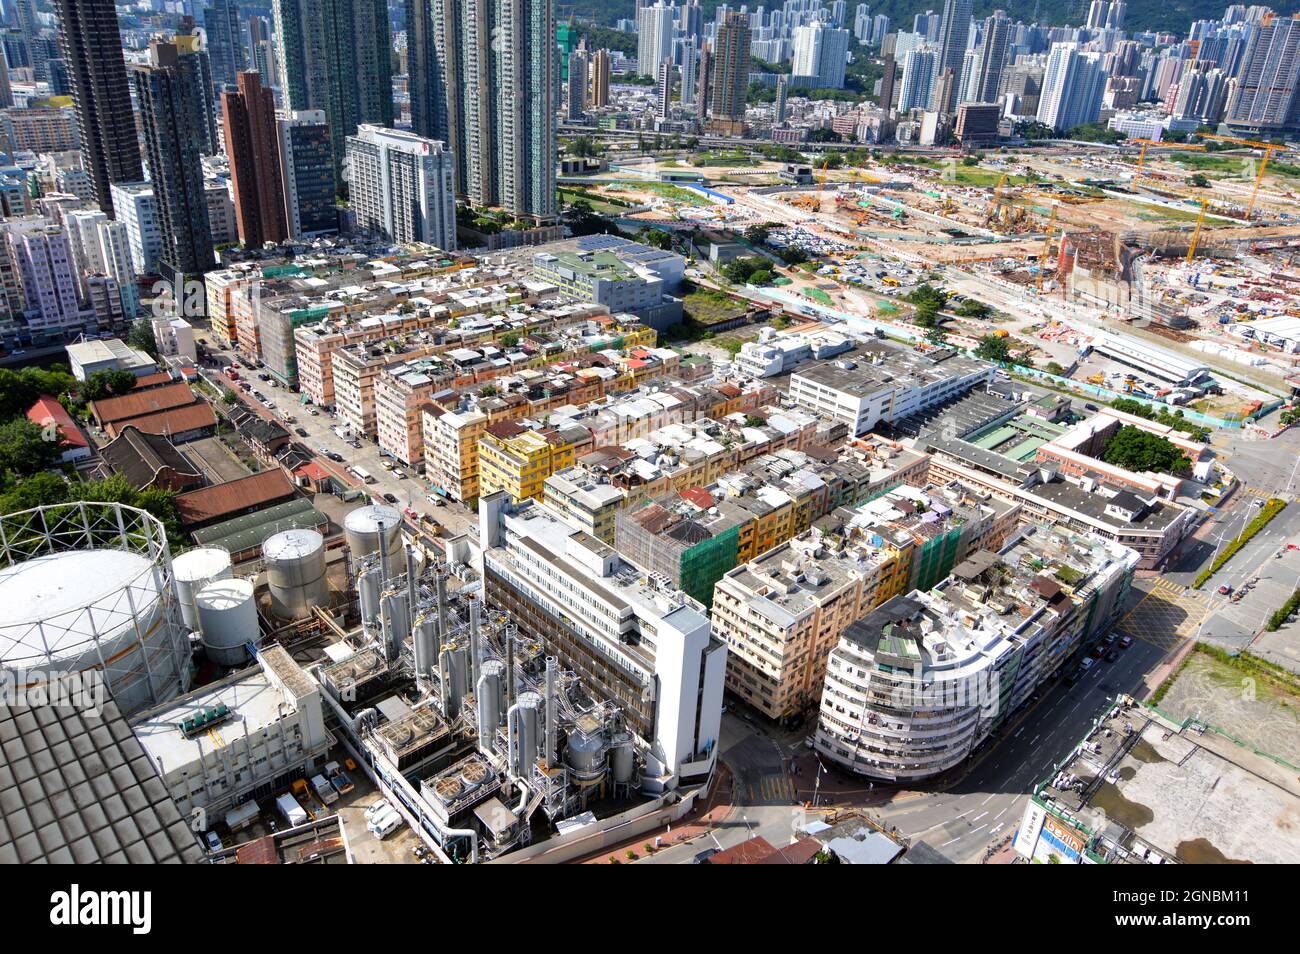 The '13 Streets' area of Ma Tau Kok (馬頭角十三街) in Kowloon, Hong Kong Stock Photo